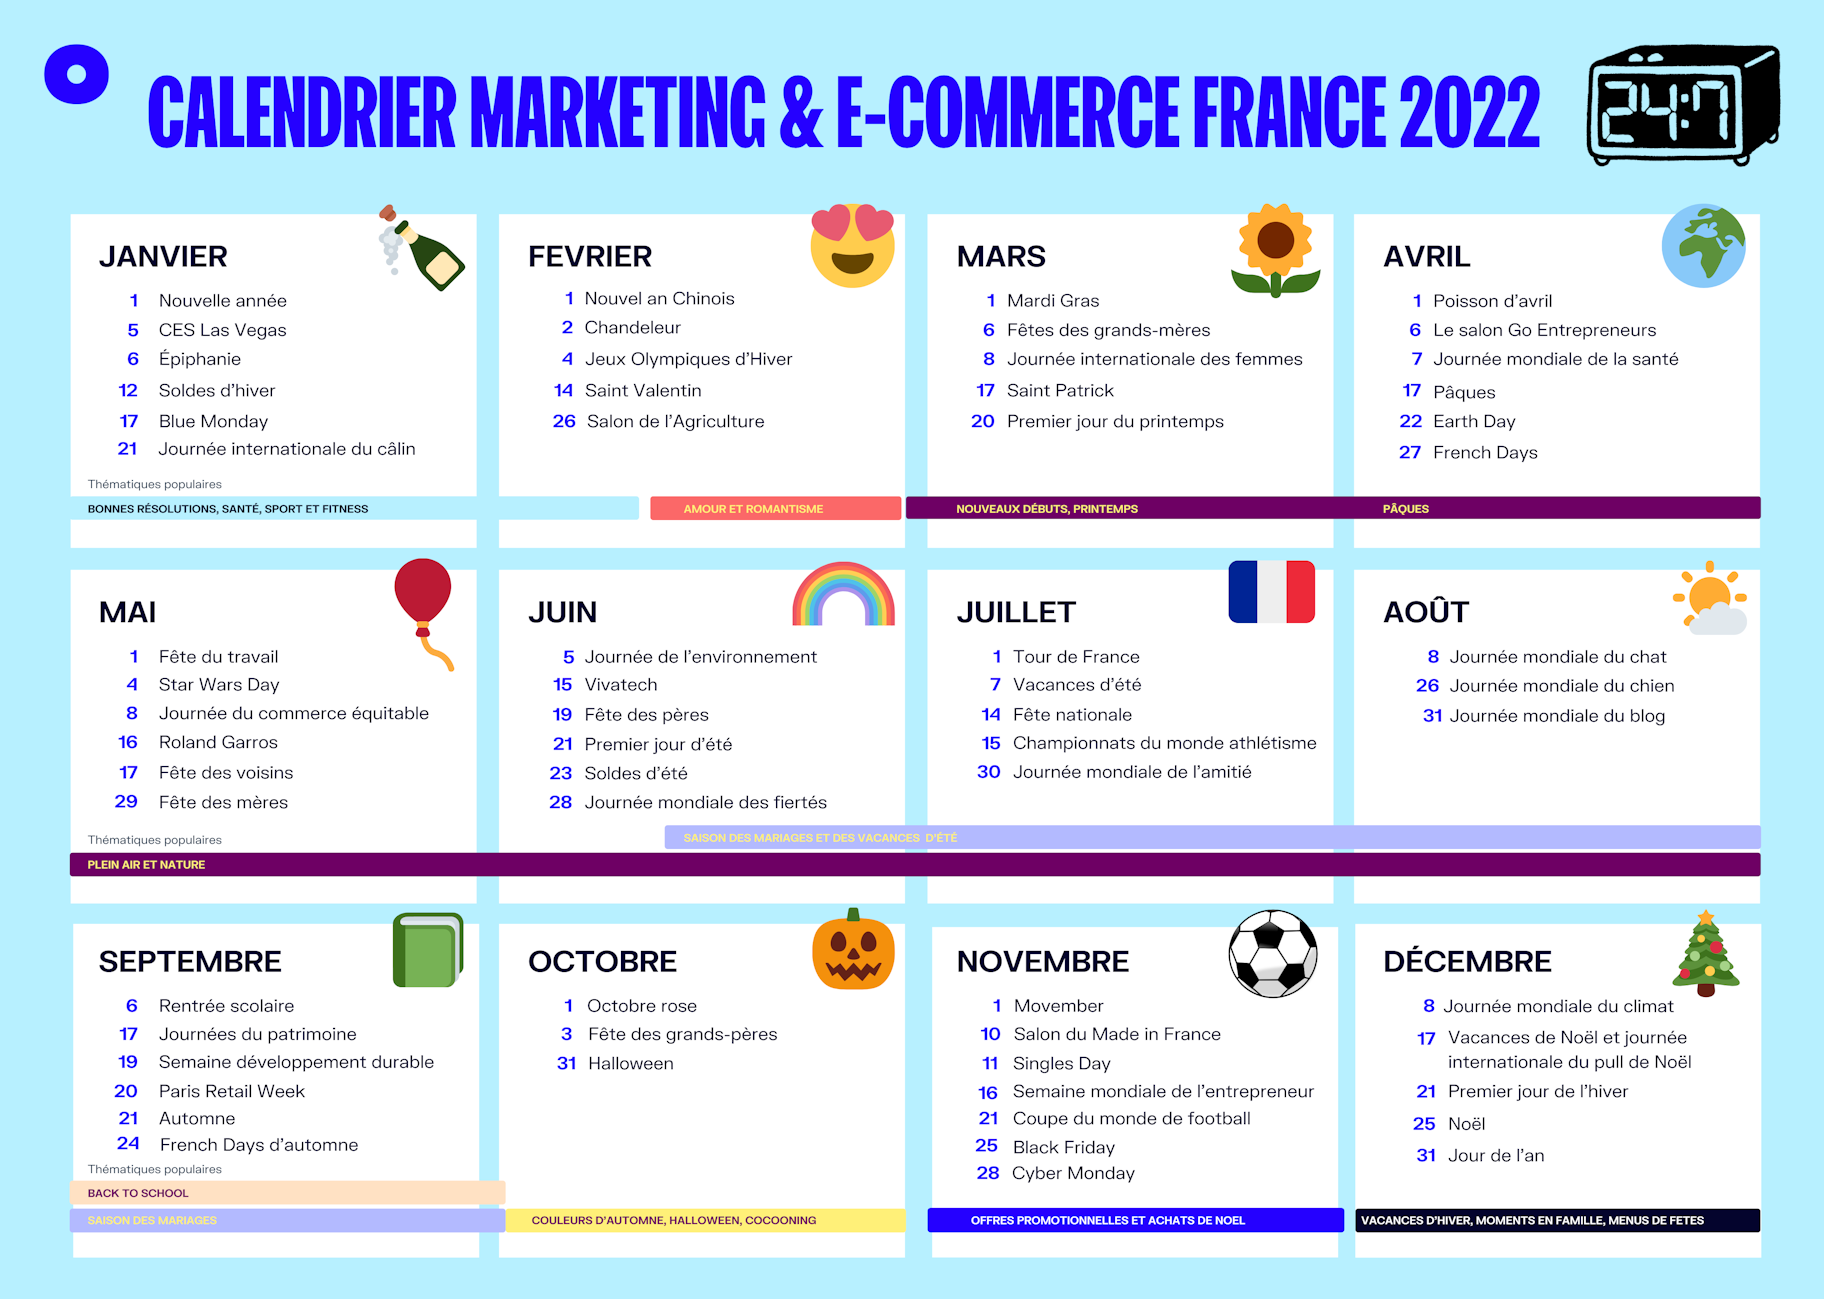 Calendrier marketing 2022 et e-commerce